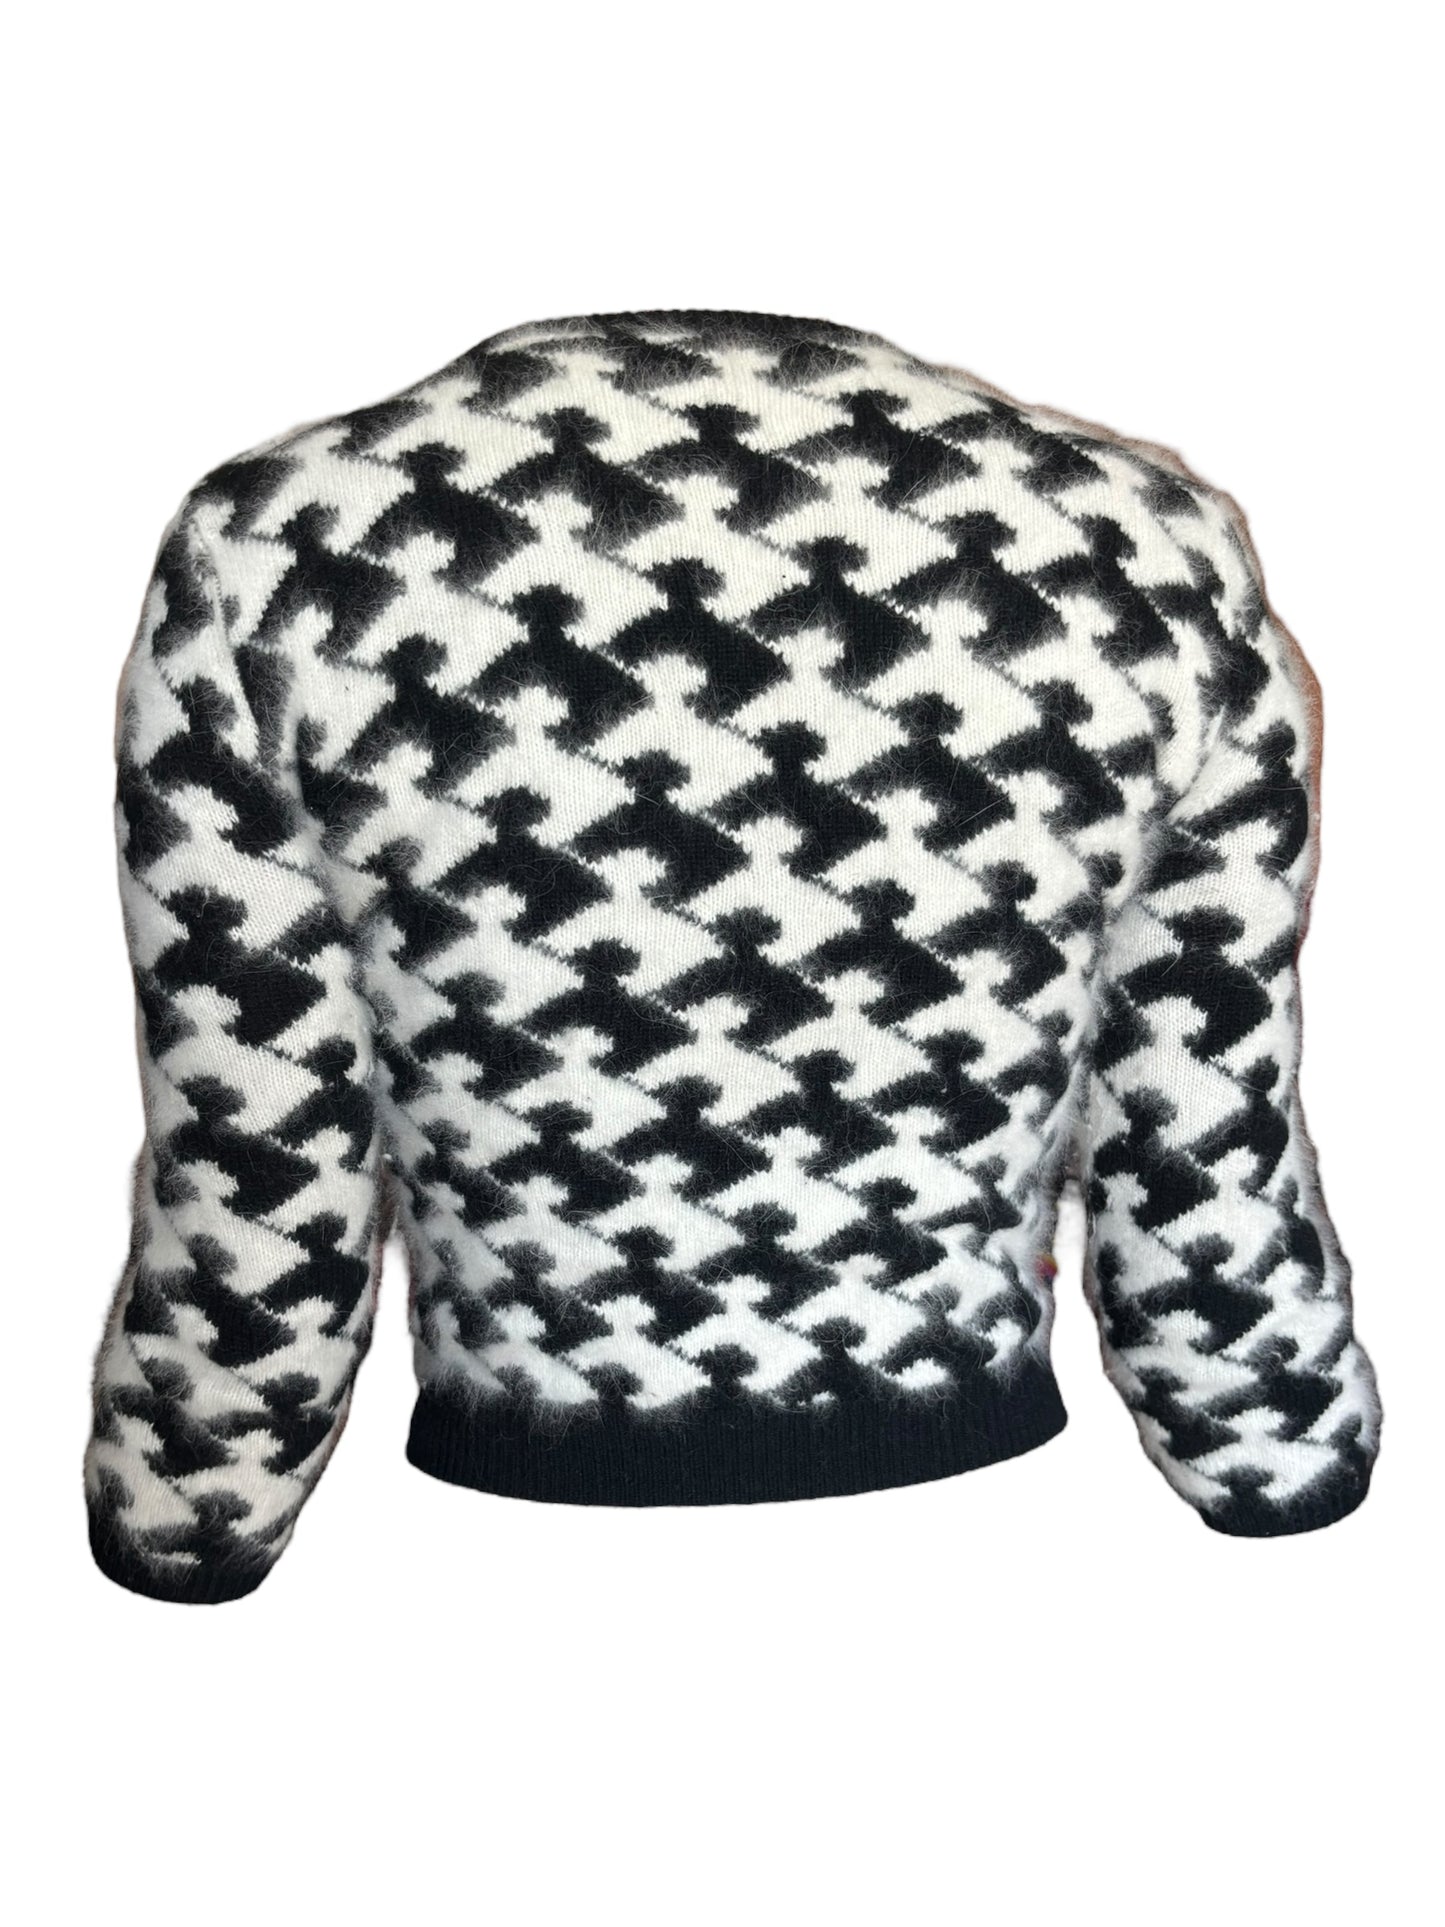 Vintage Cashmere Sweater - M